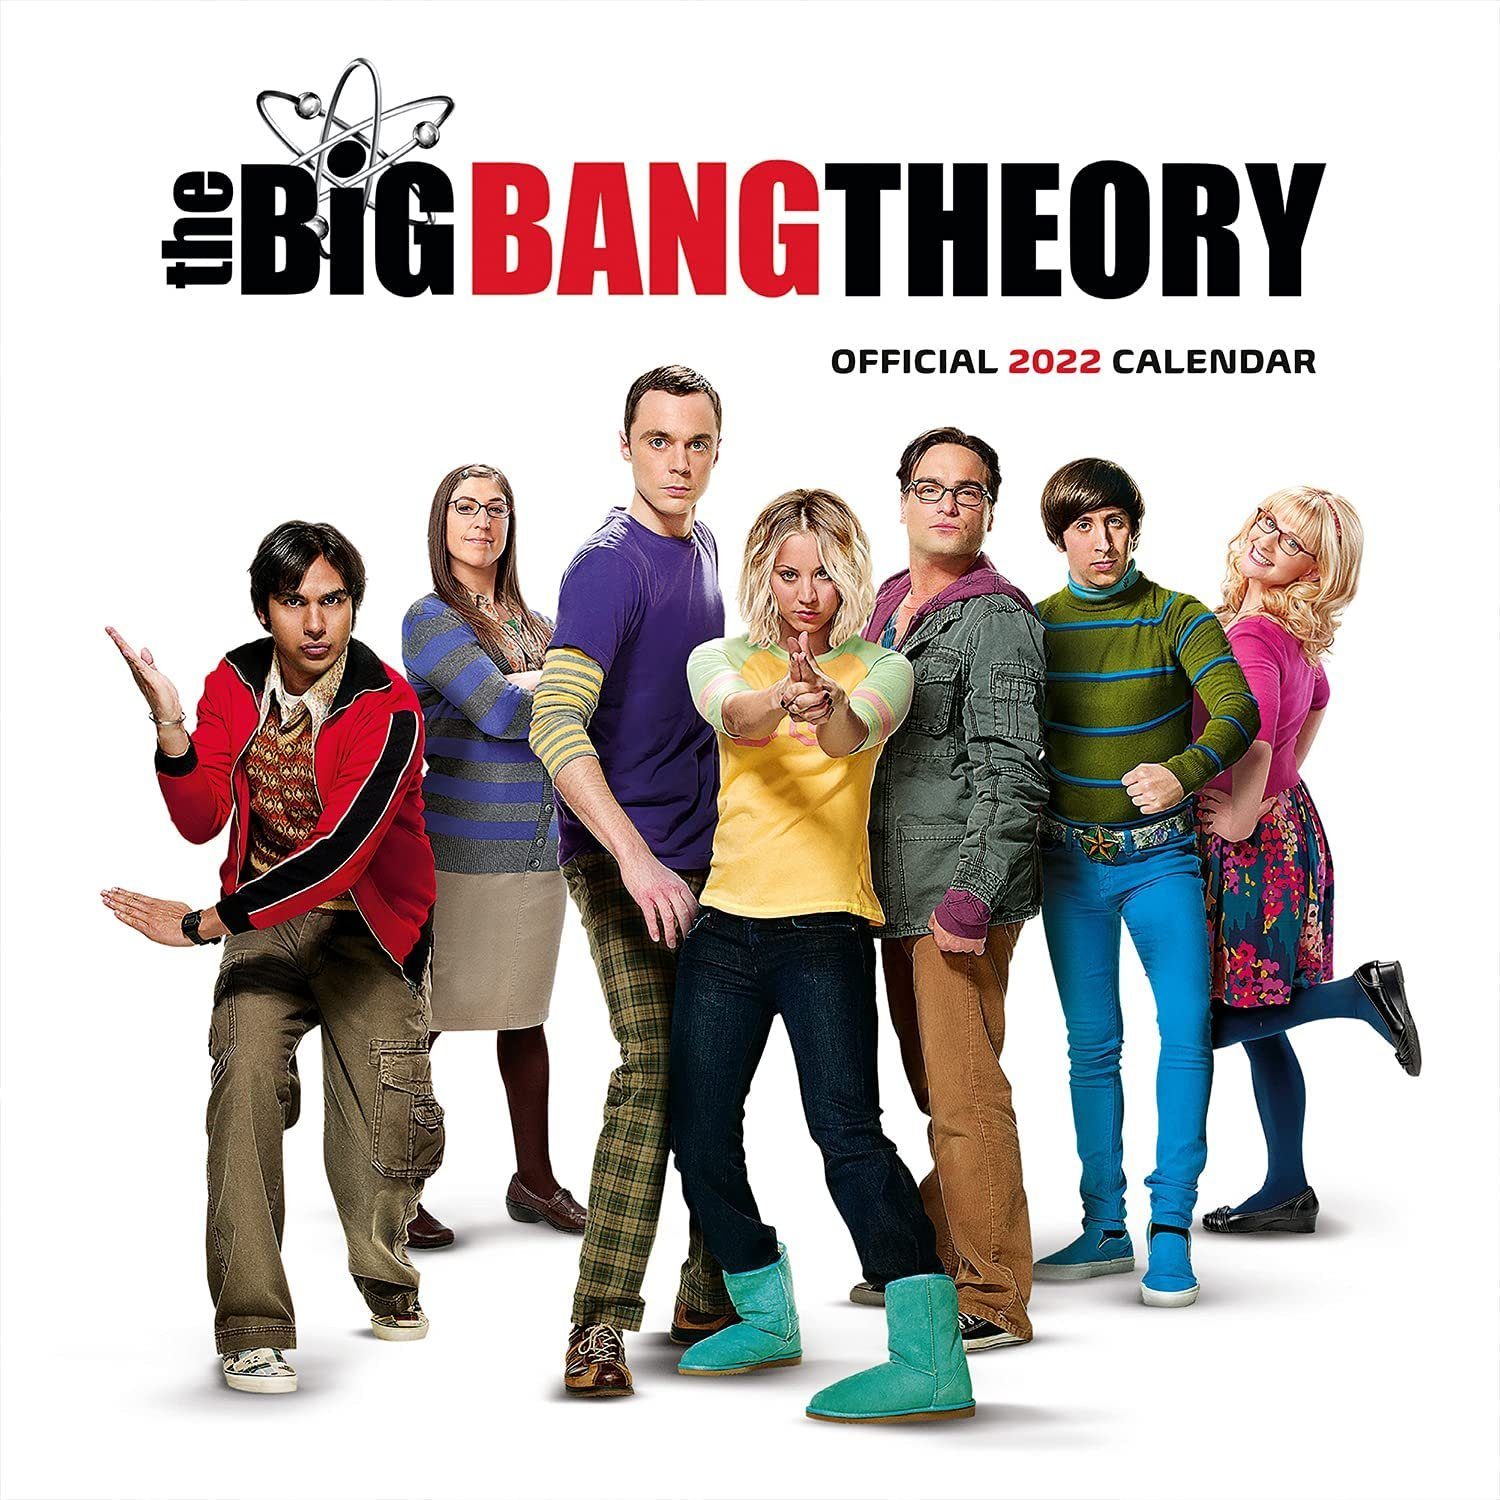 Danilo Monatskalender The Big Bang Theory - 2022 Kalender - ca. 60 cm x 30 cm